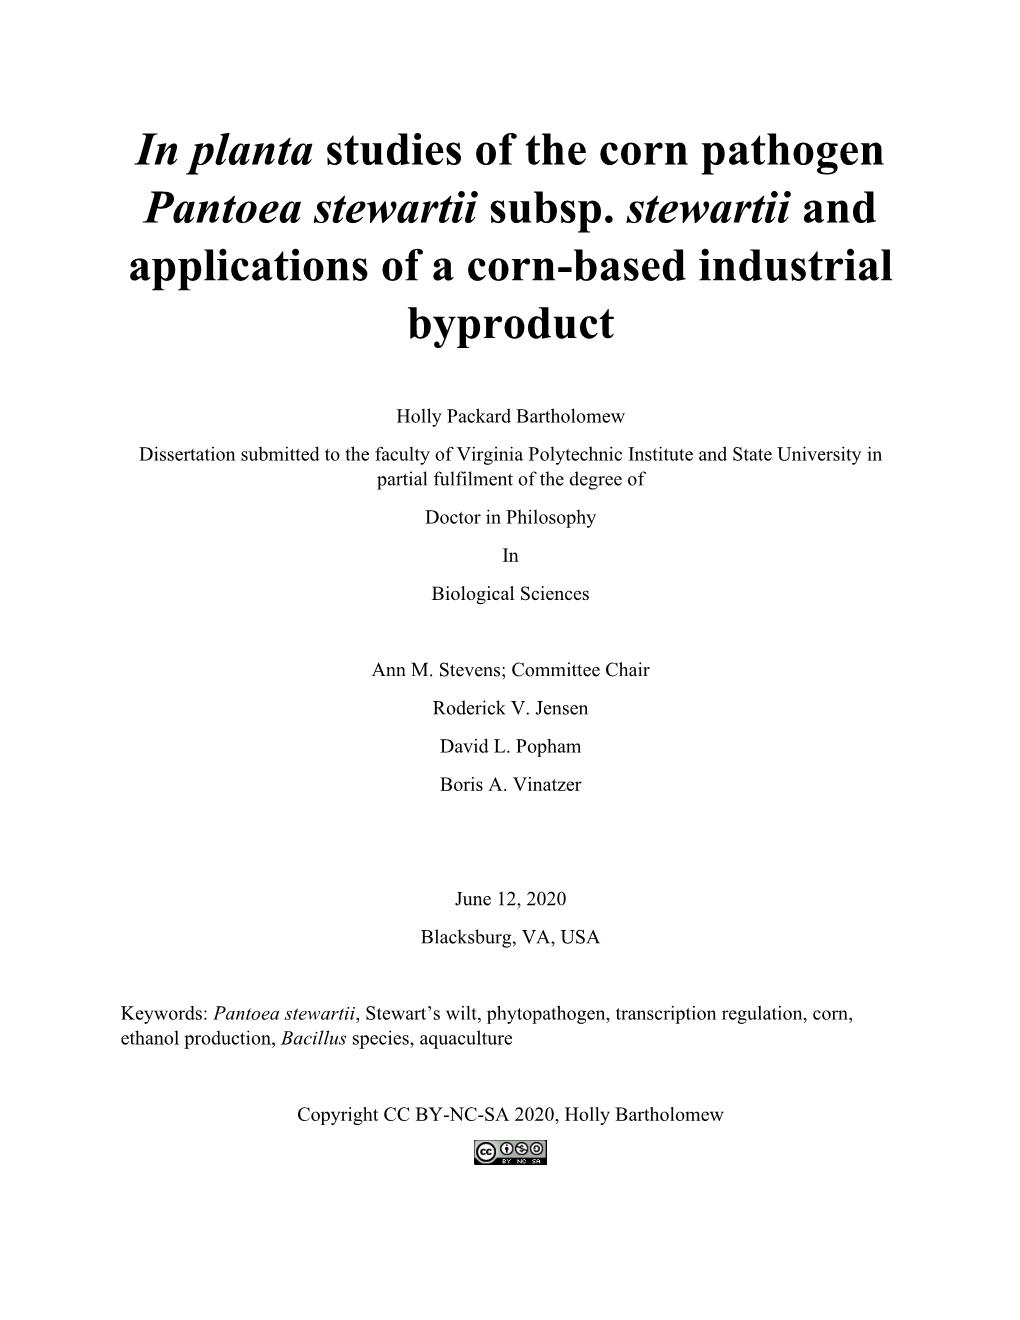 In Planta Studies of the Corn Pathogen Pantoea Stewartii Subsp